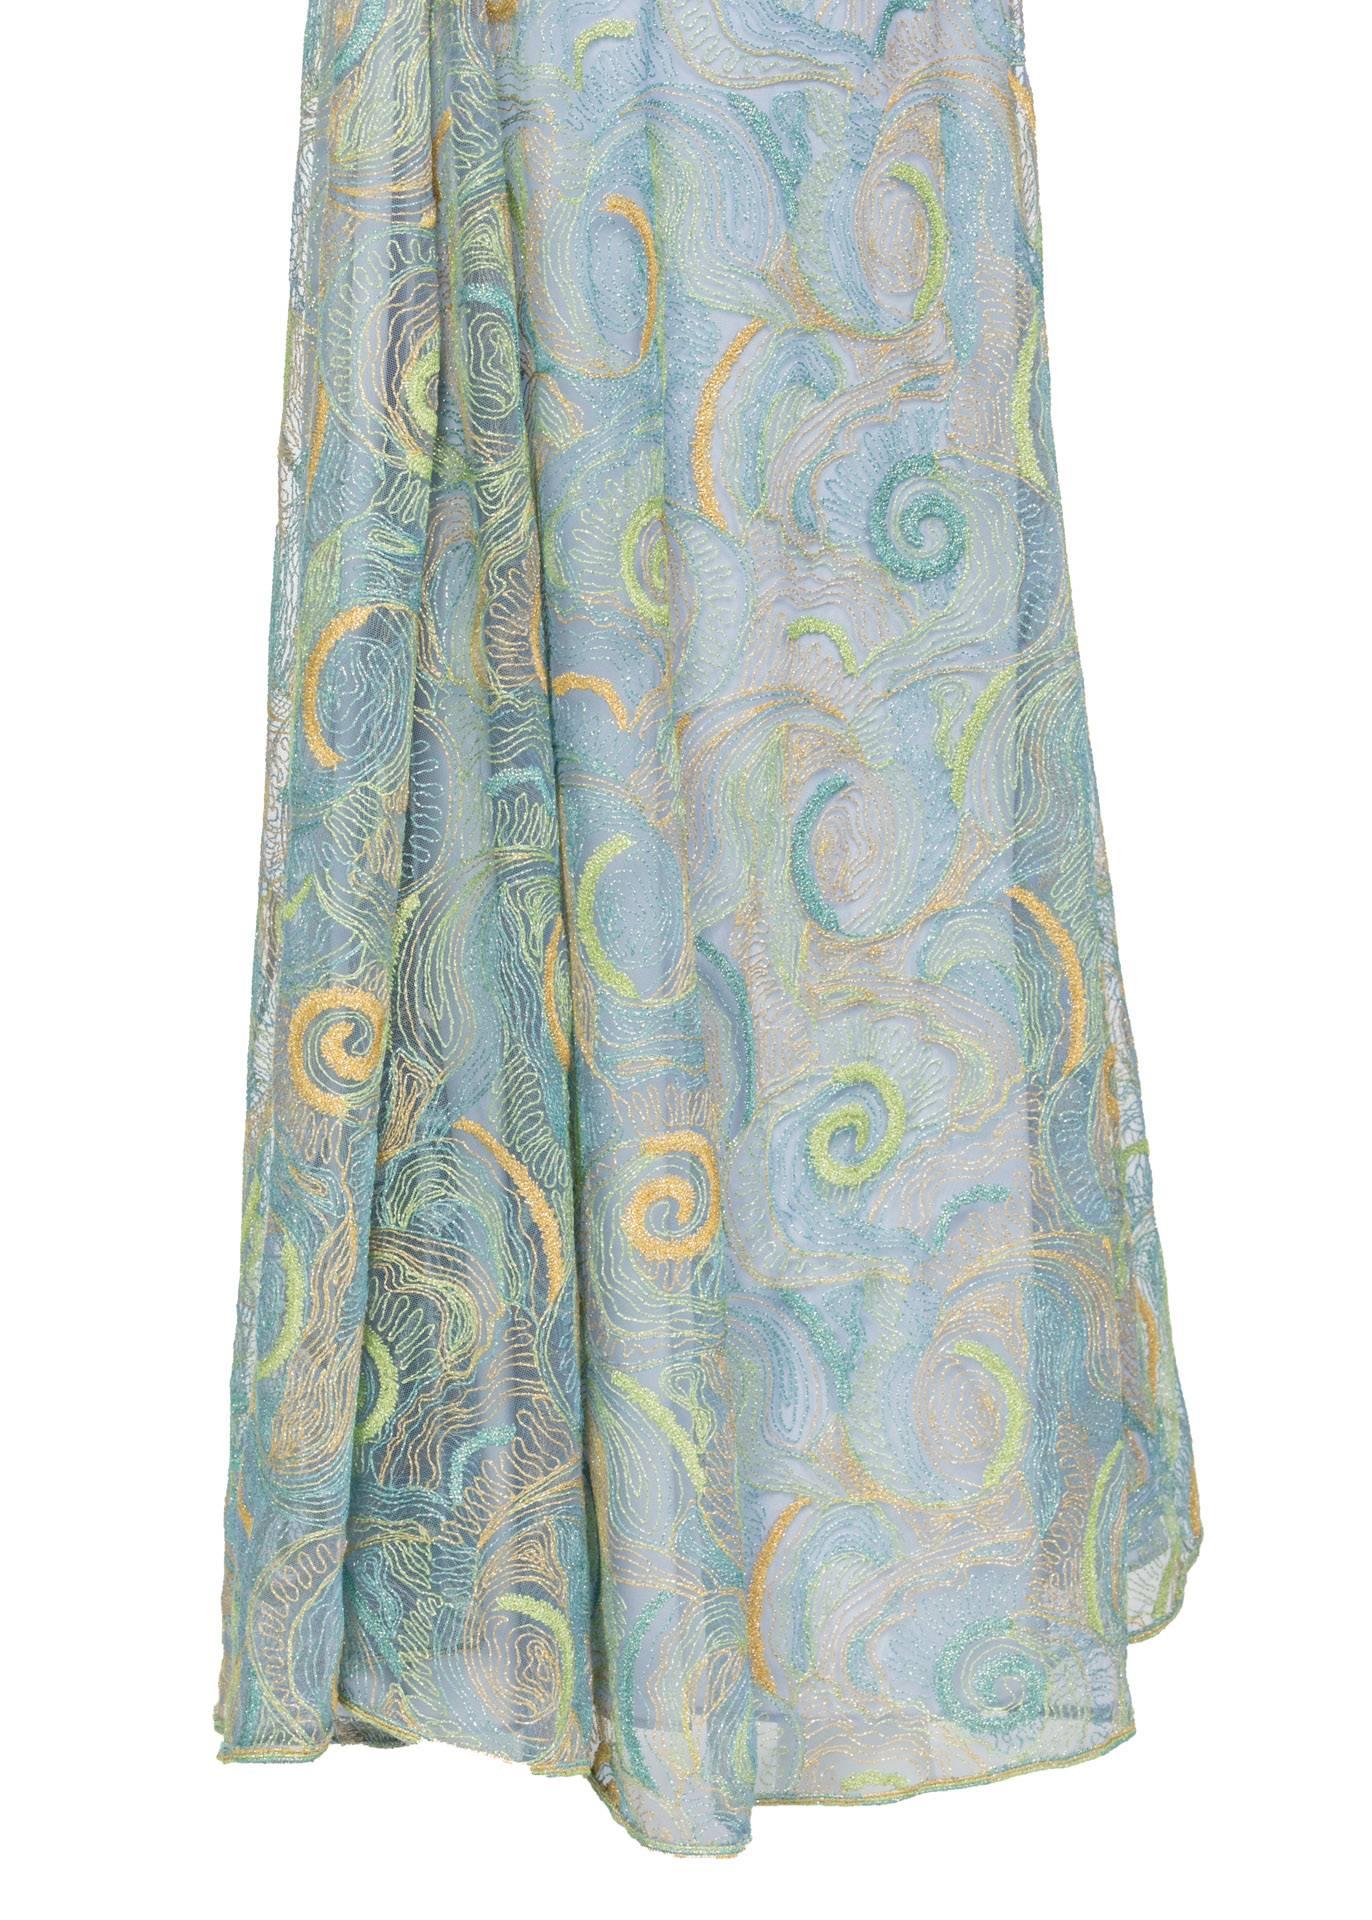 2102 Rodarte Van Gogh Multicolored Metallic Embroidered Tulle Dress 1